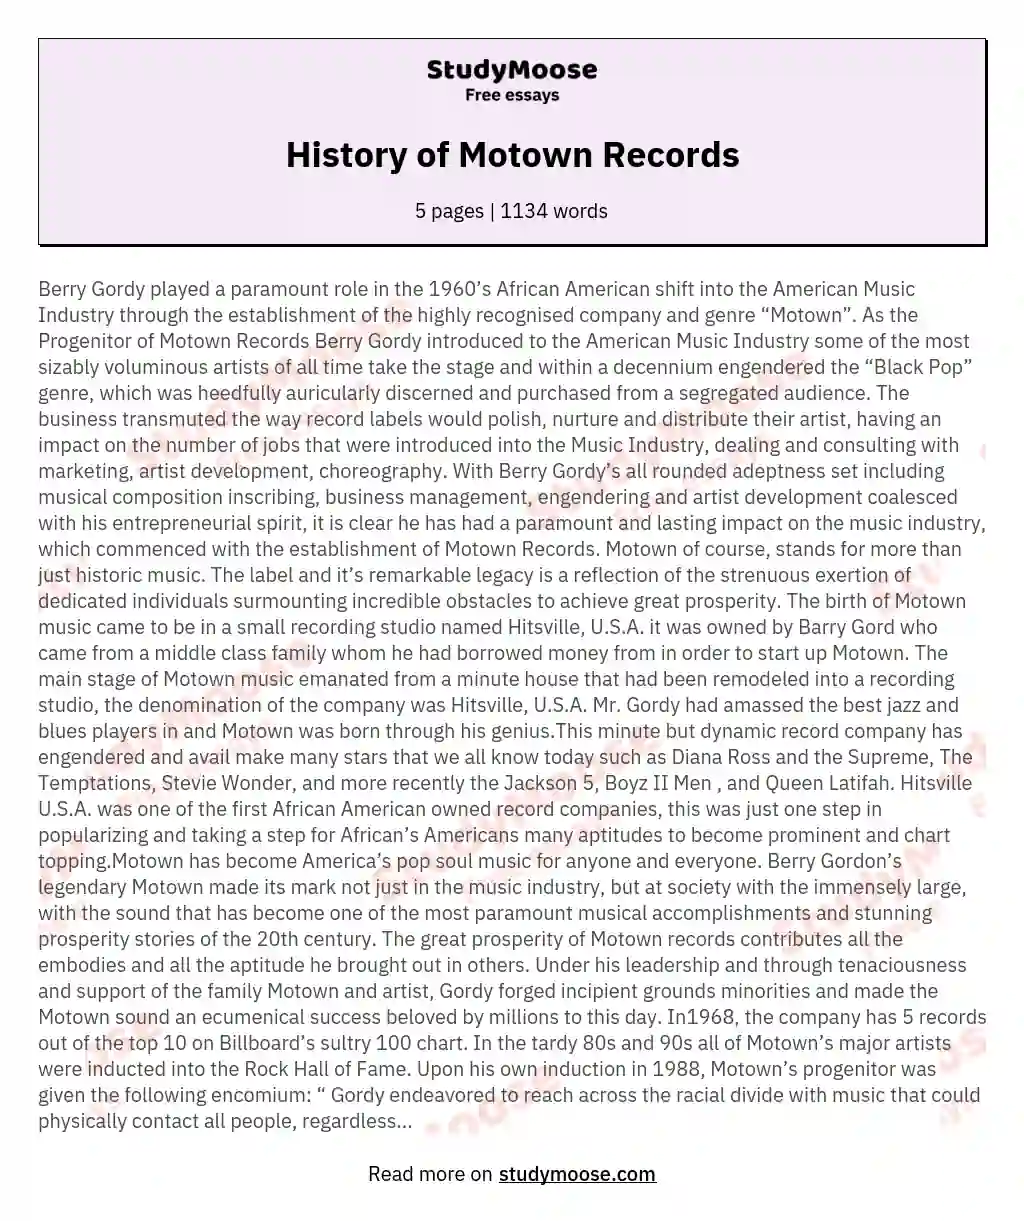 History of Motown Records essay